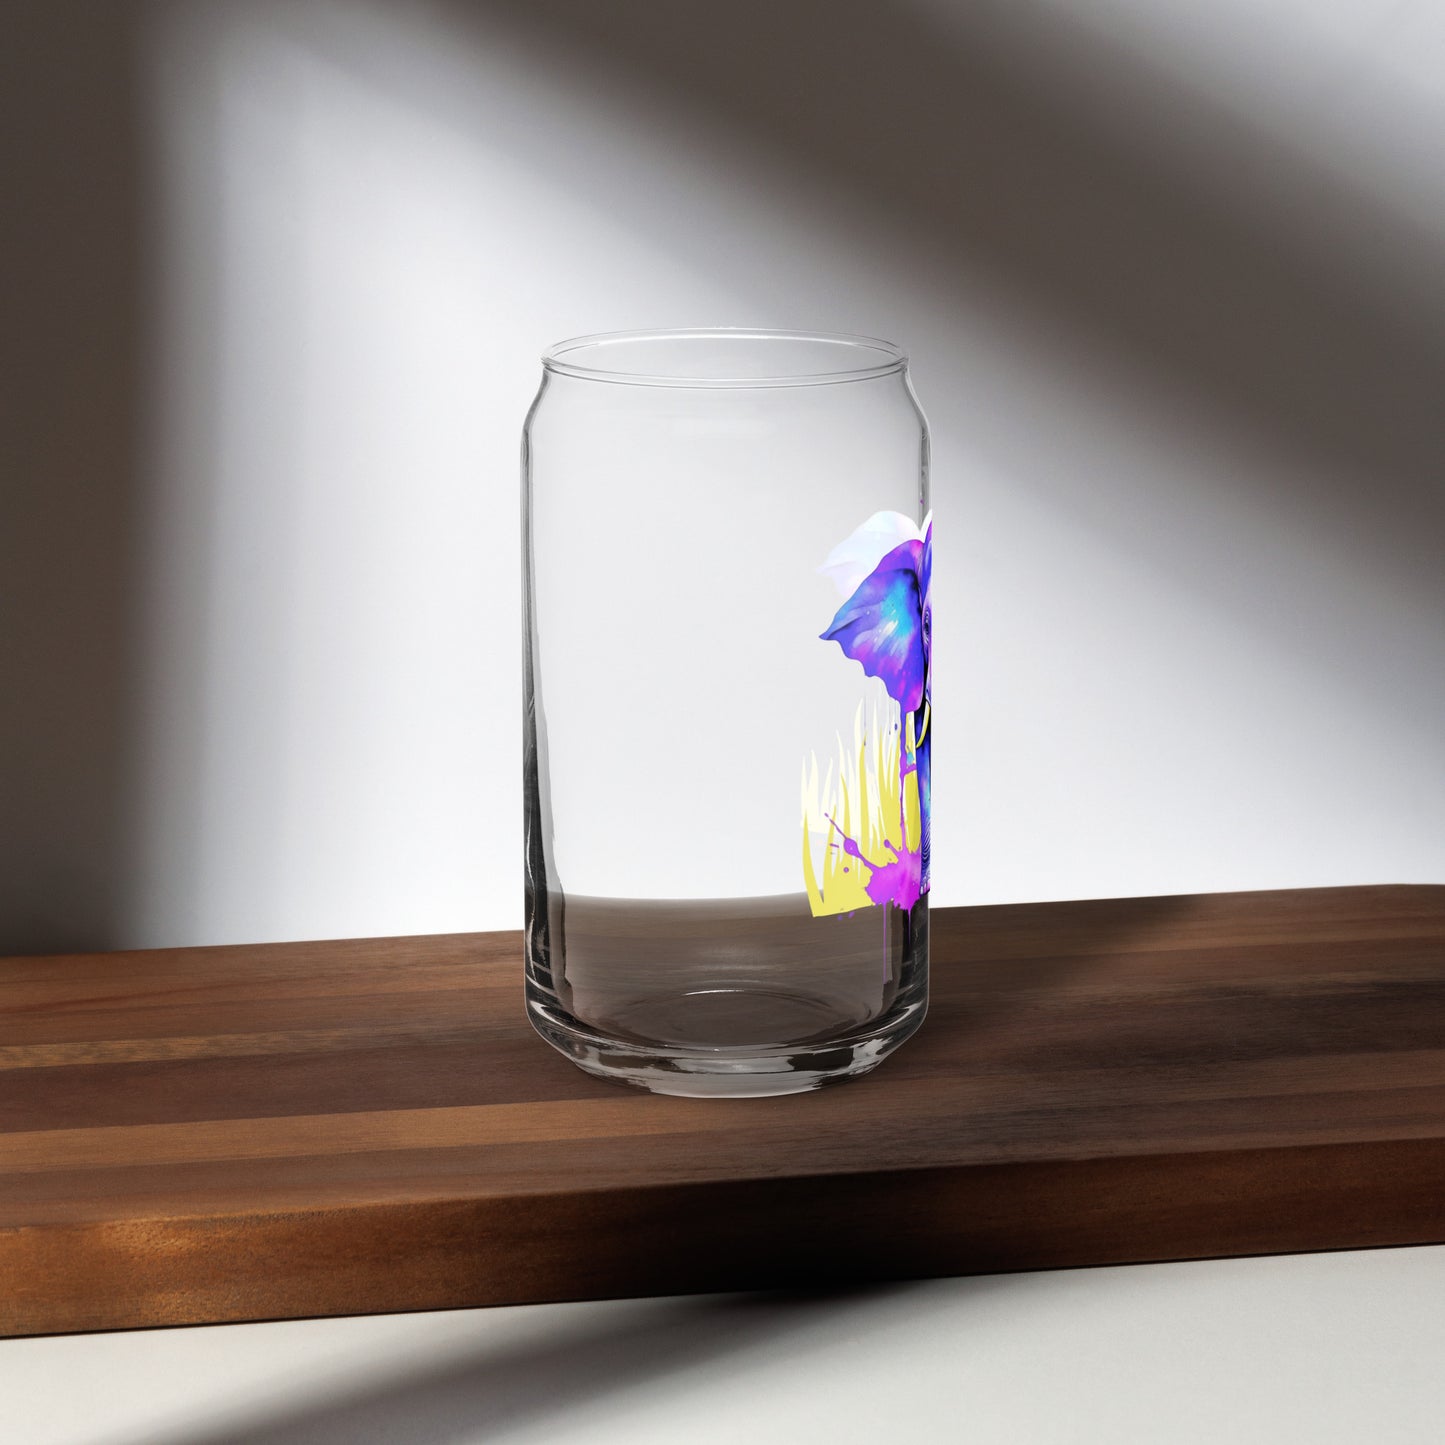 Vibrant Elephant Can-shaped glass